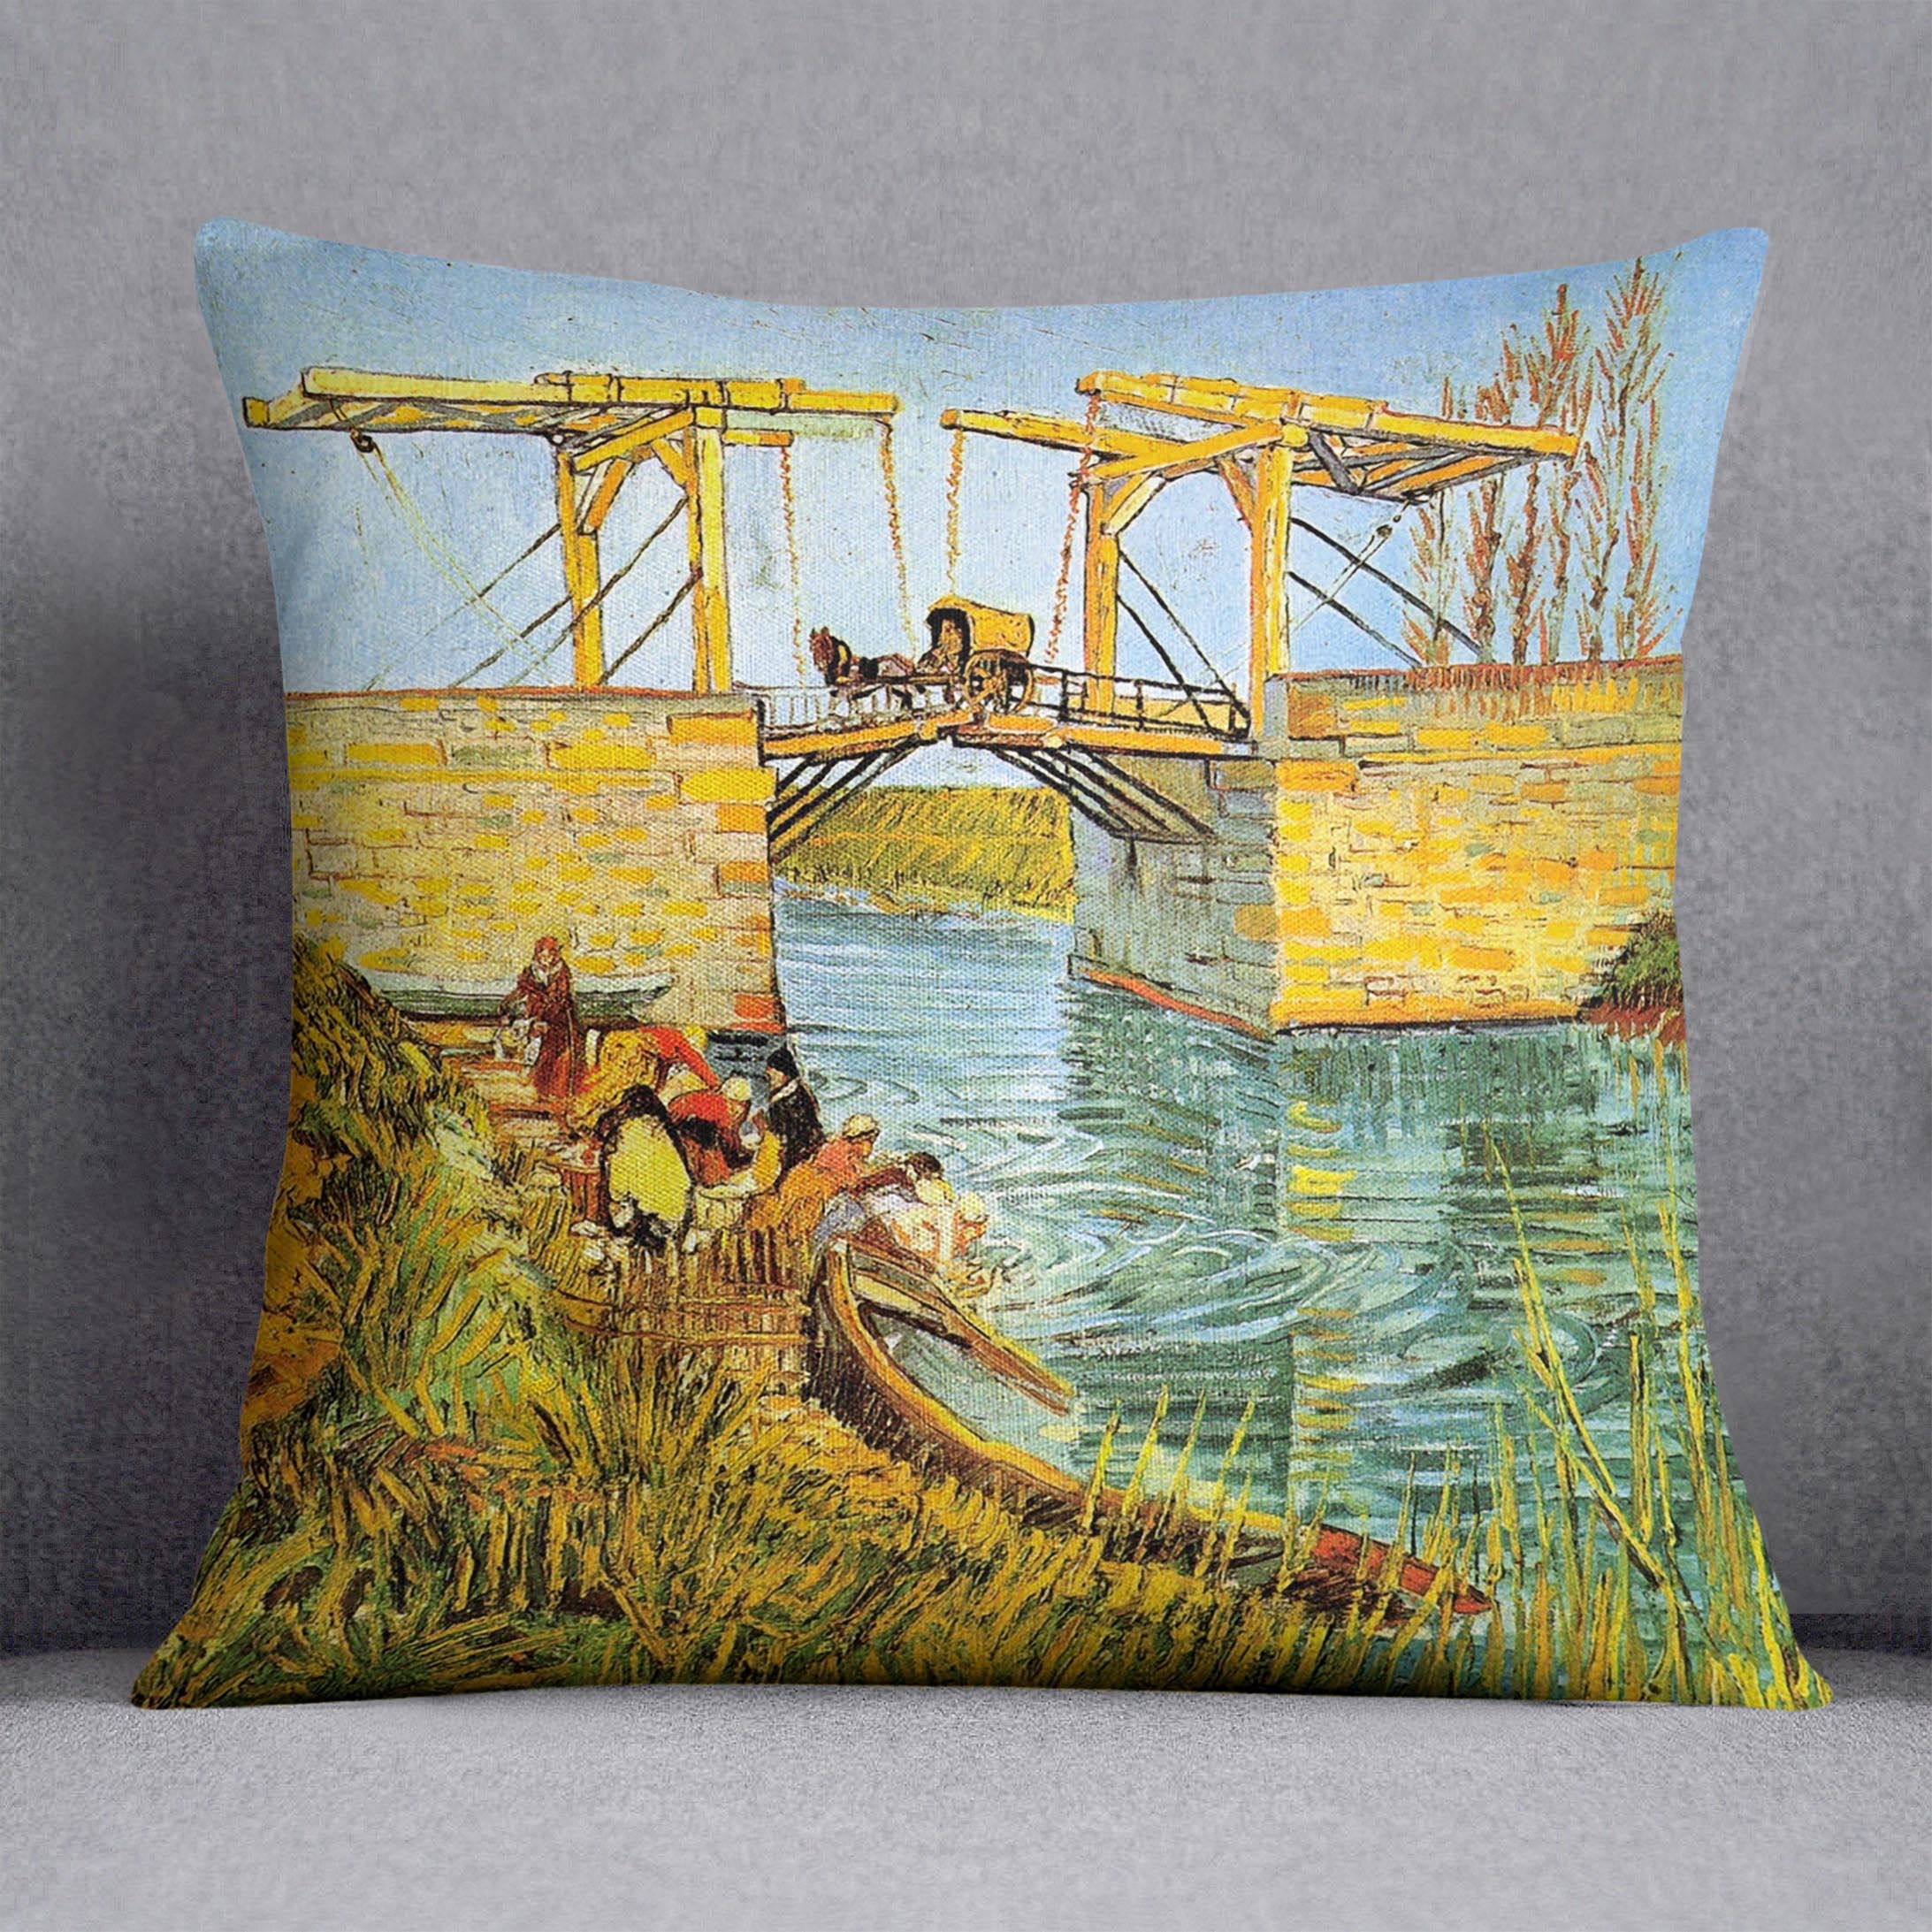 The Langlois Bridge at Arles by Van Gogh Cushion